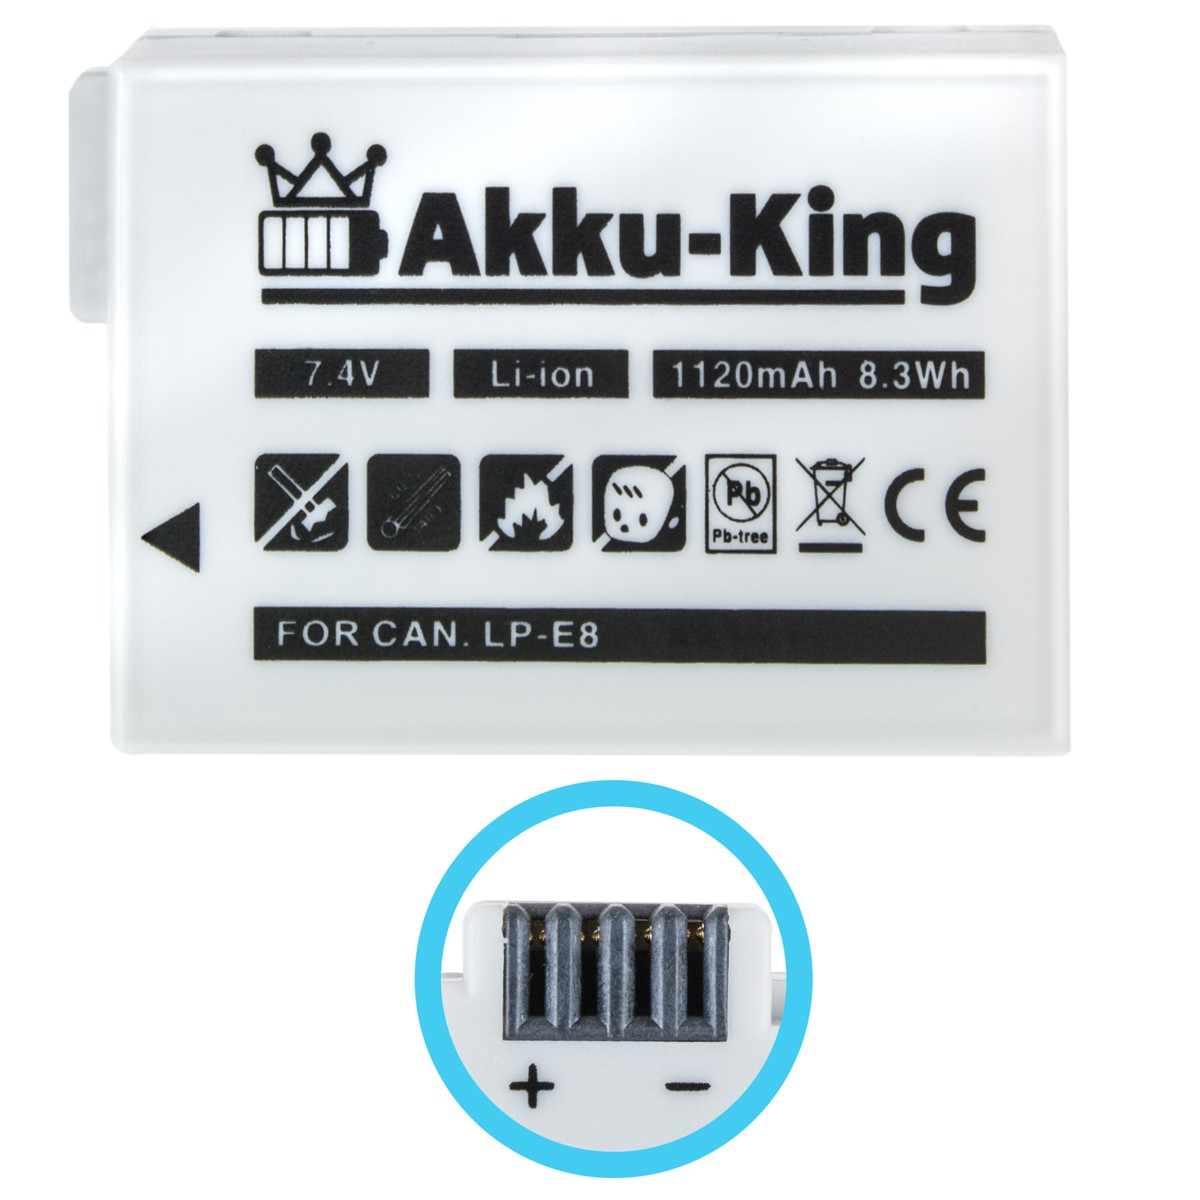 Li-Ion AKKU-KING 7.4 LP-E8 Akku Kamera-Akku, kompatibel Volt, Canon 1120mAh mit